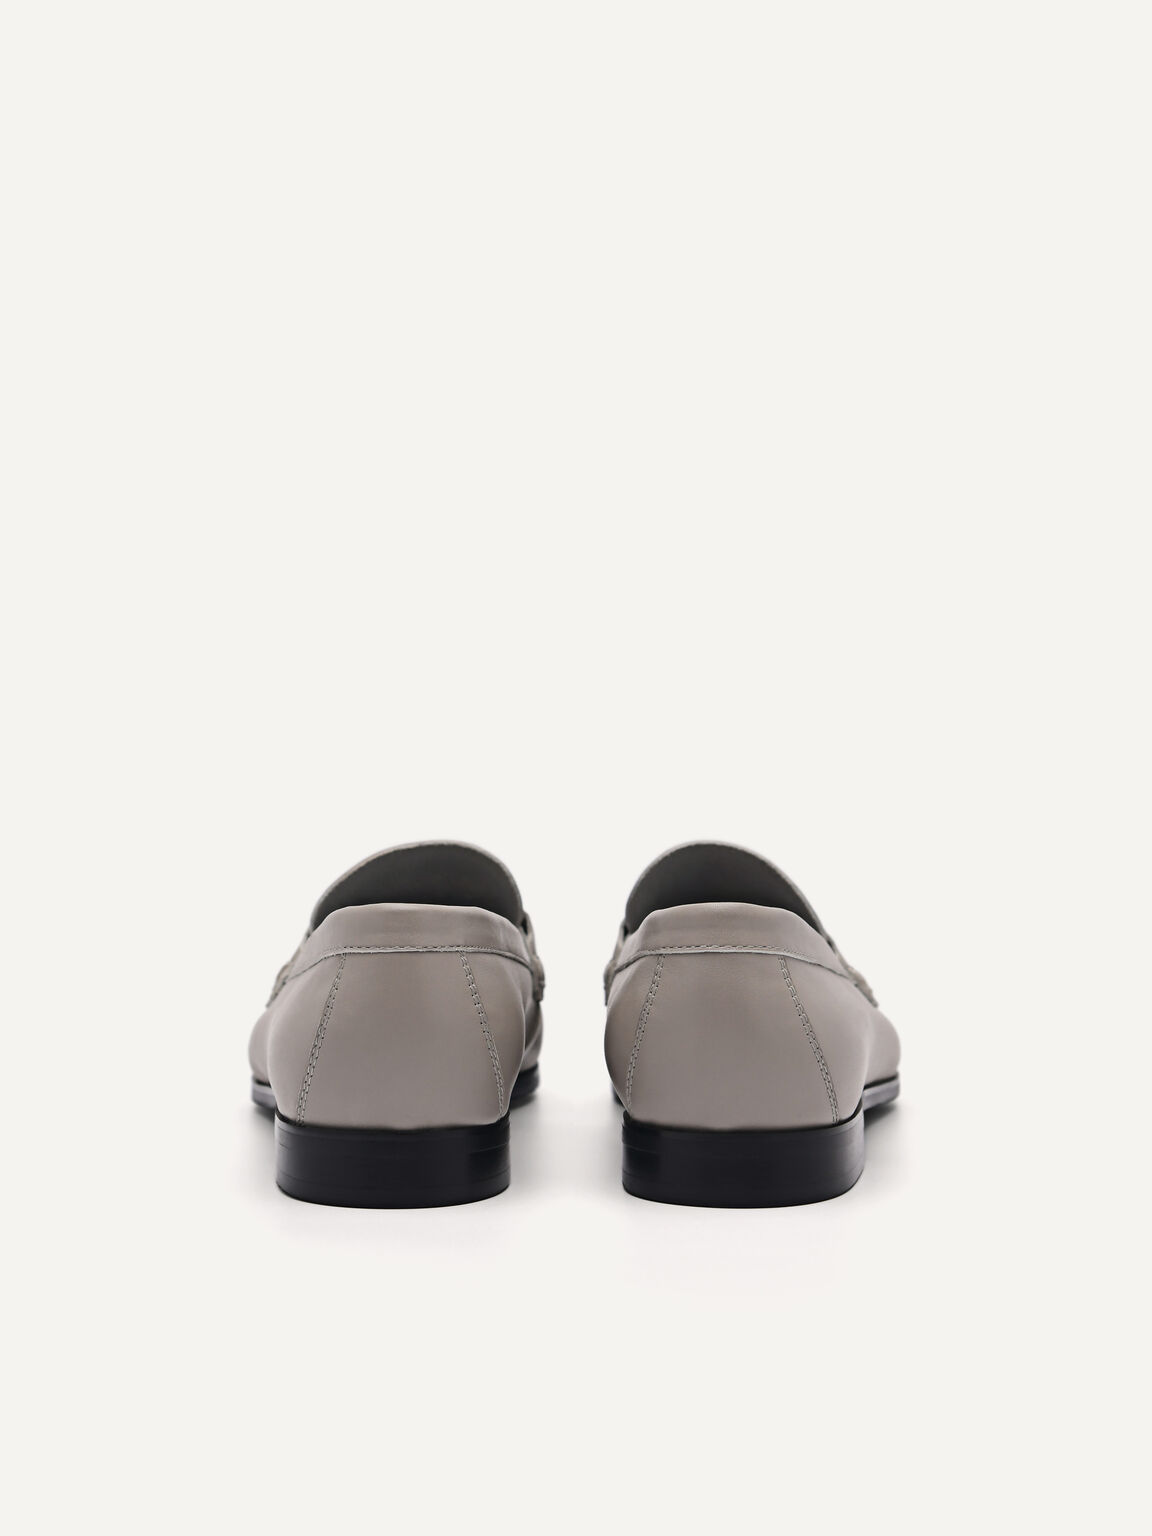 PEDRO工作室Kate皮革樂福鞋, 灰色